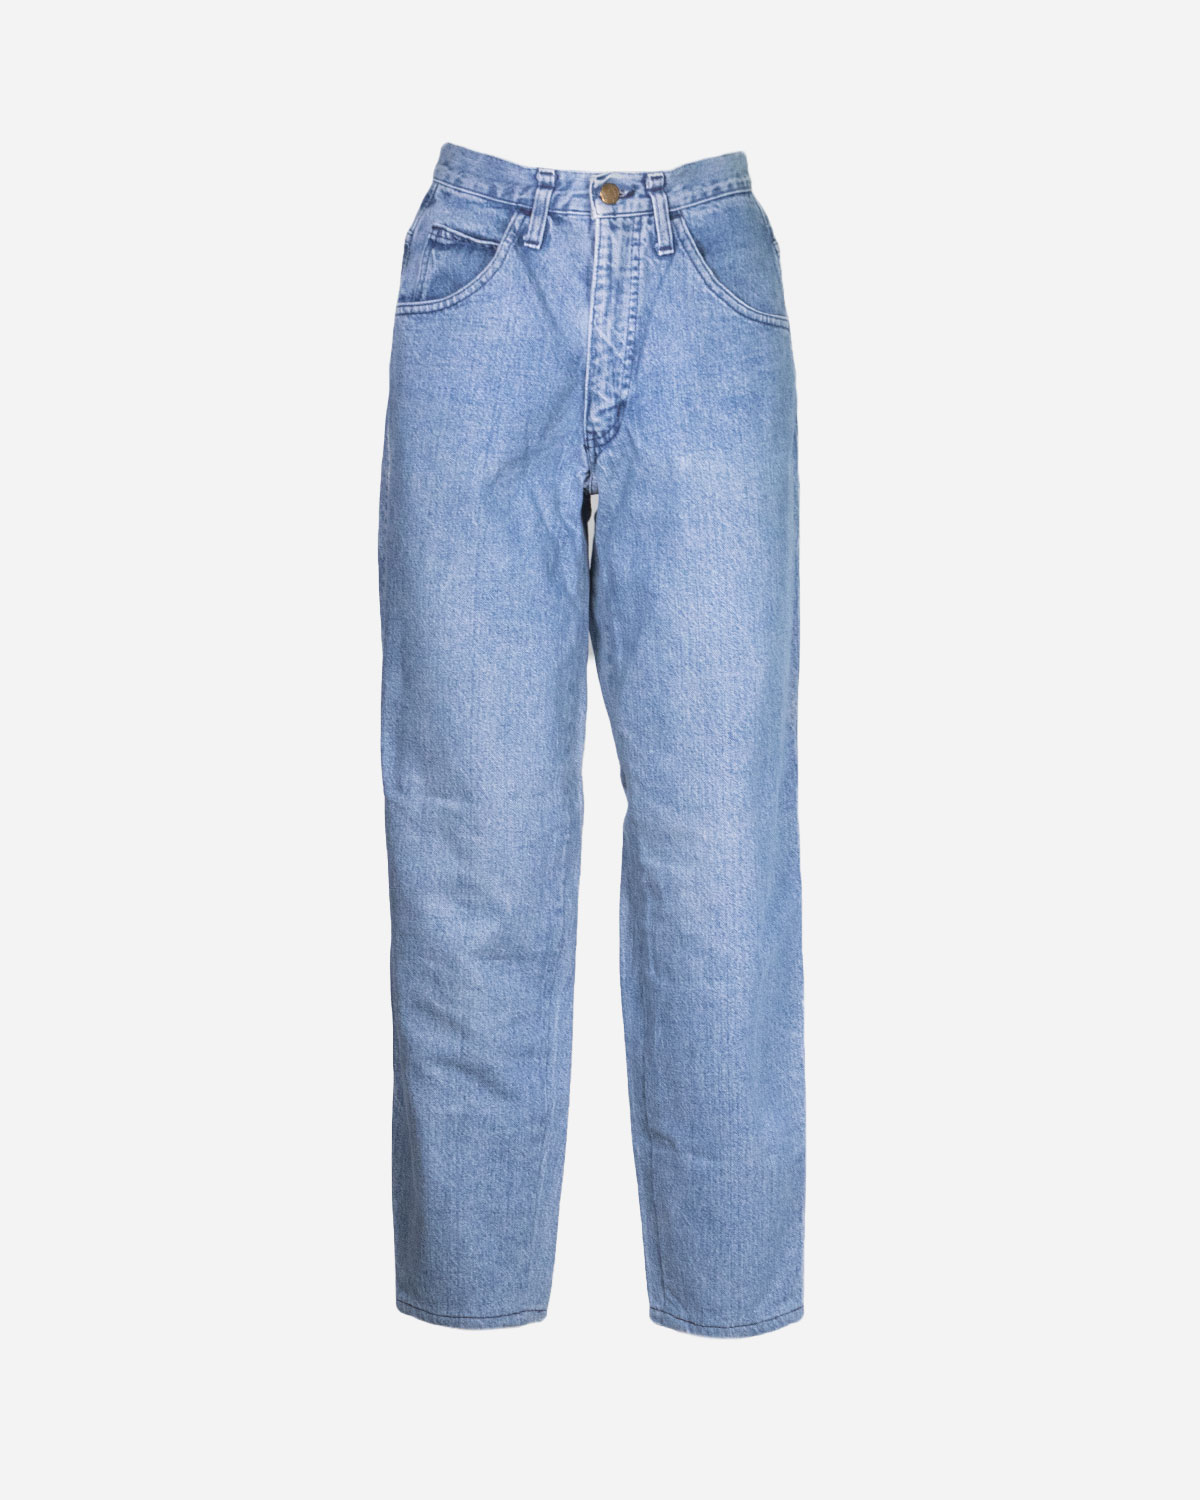 Box four top designer jeans trousers